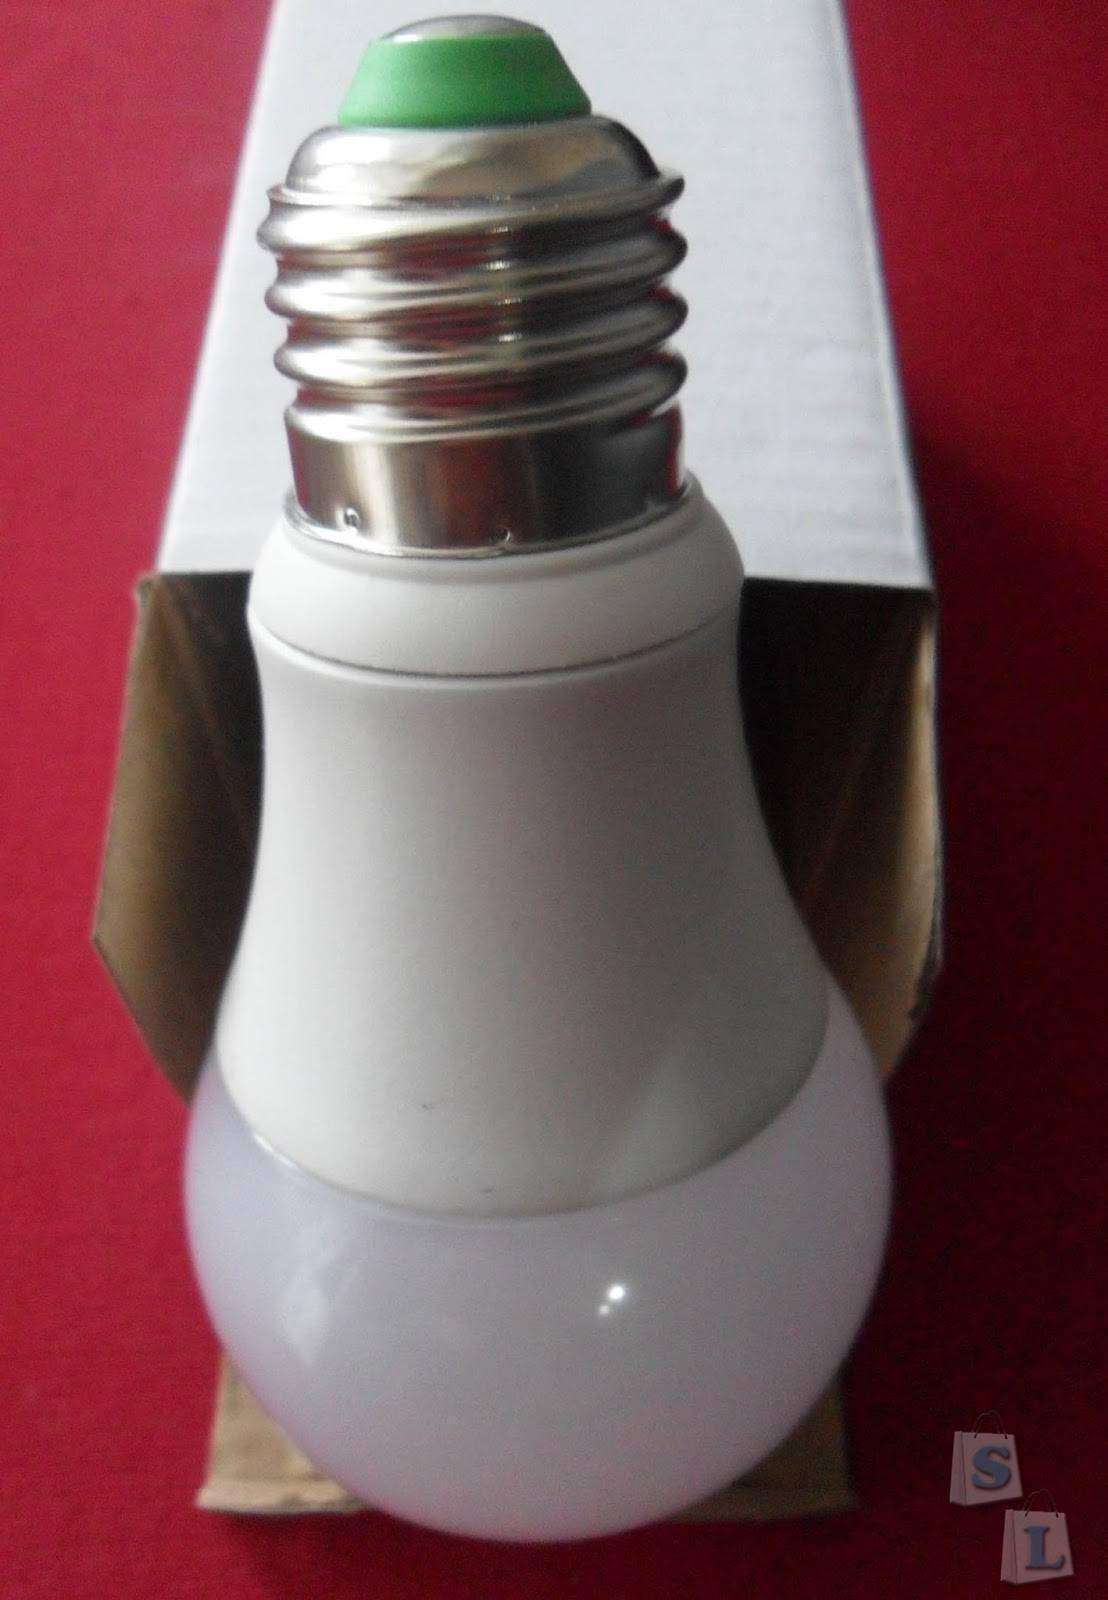 Miniinthebox: Светодиодная лампа на SMD 5730